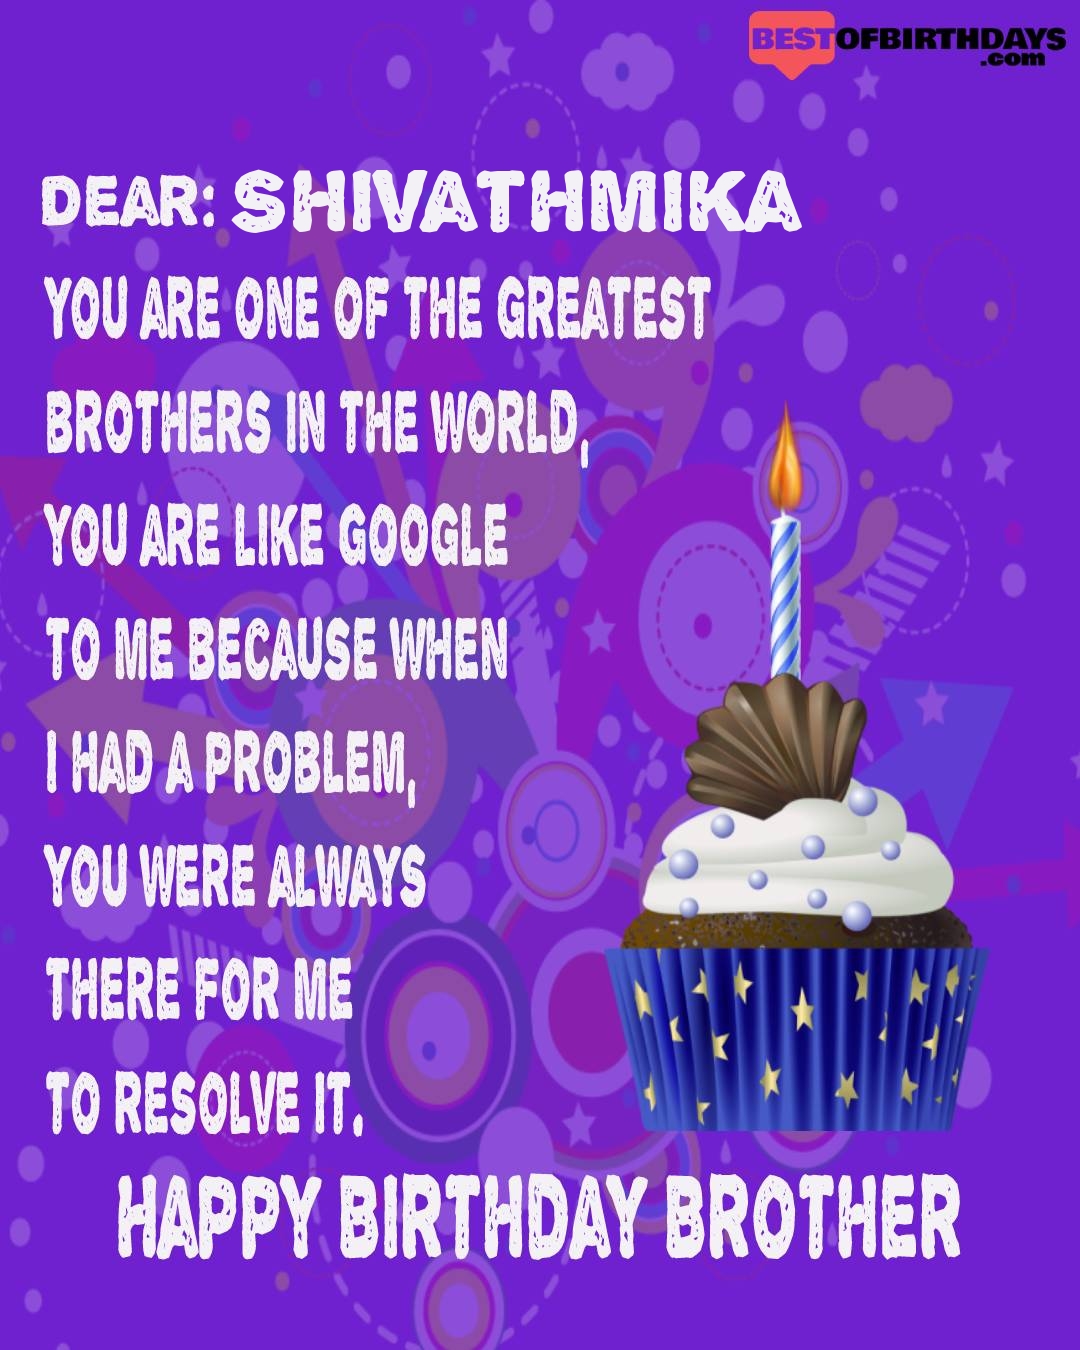 Happy birthday shivathmika bhai brother bro